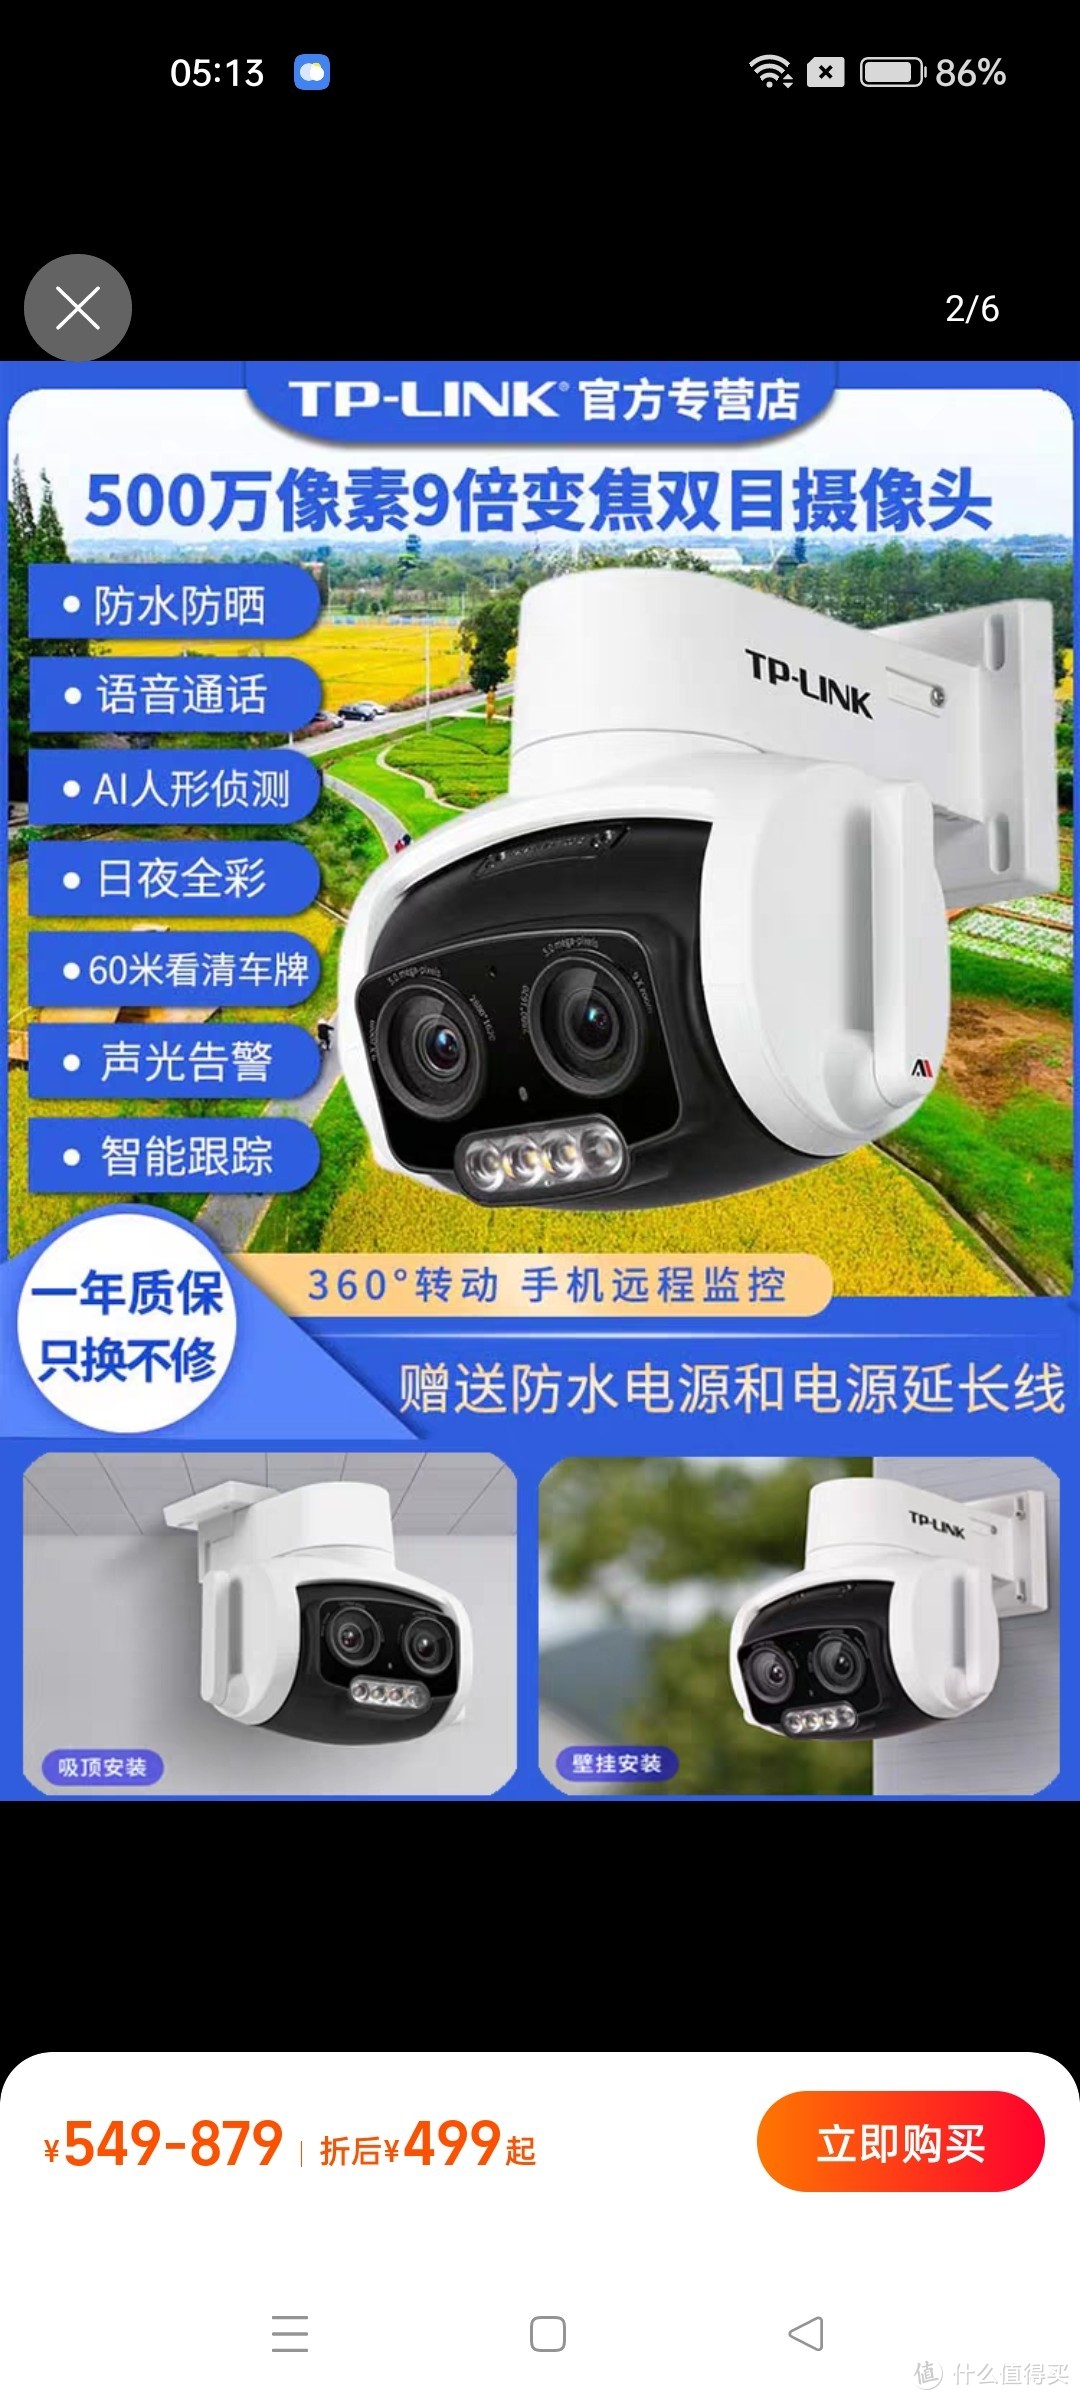 tp-link 500万像素9倍变焦5G双频监控双目/多目摄像头手机远程监控家用摄影高清全彩夜视防水球机AI人形侦